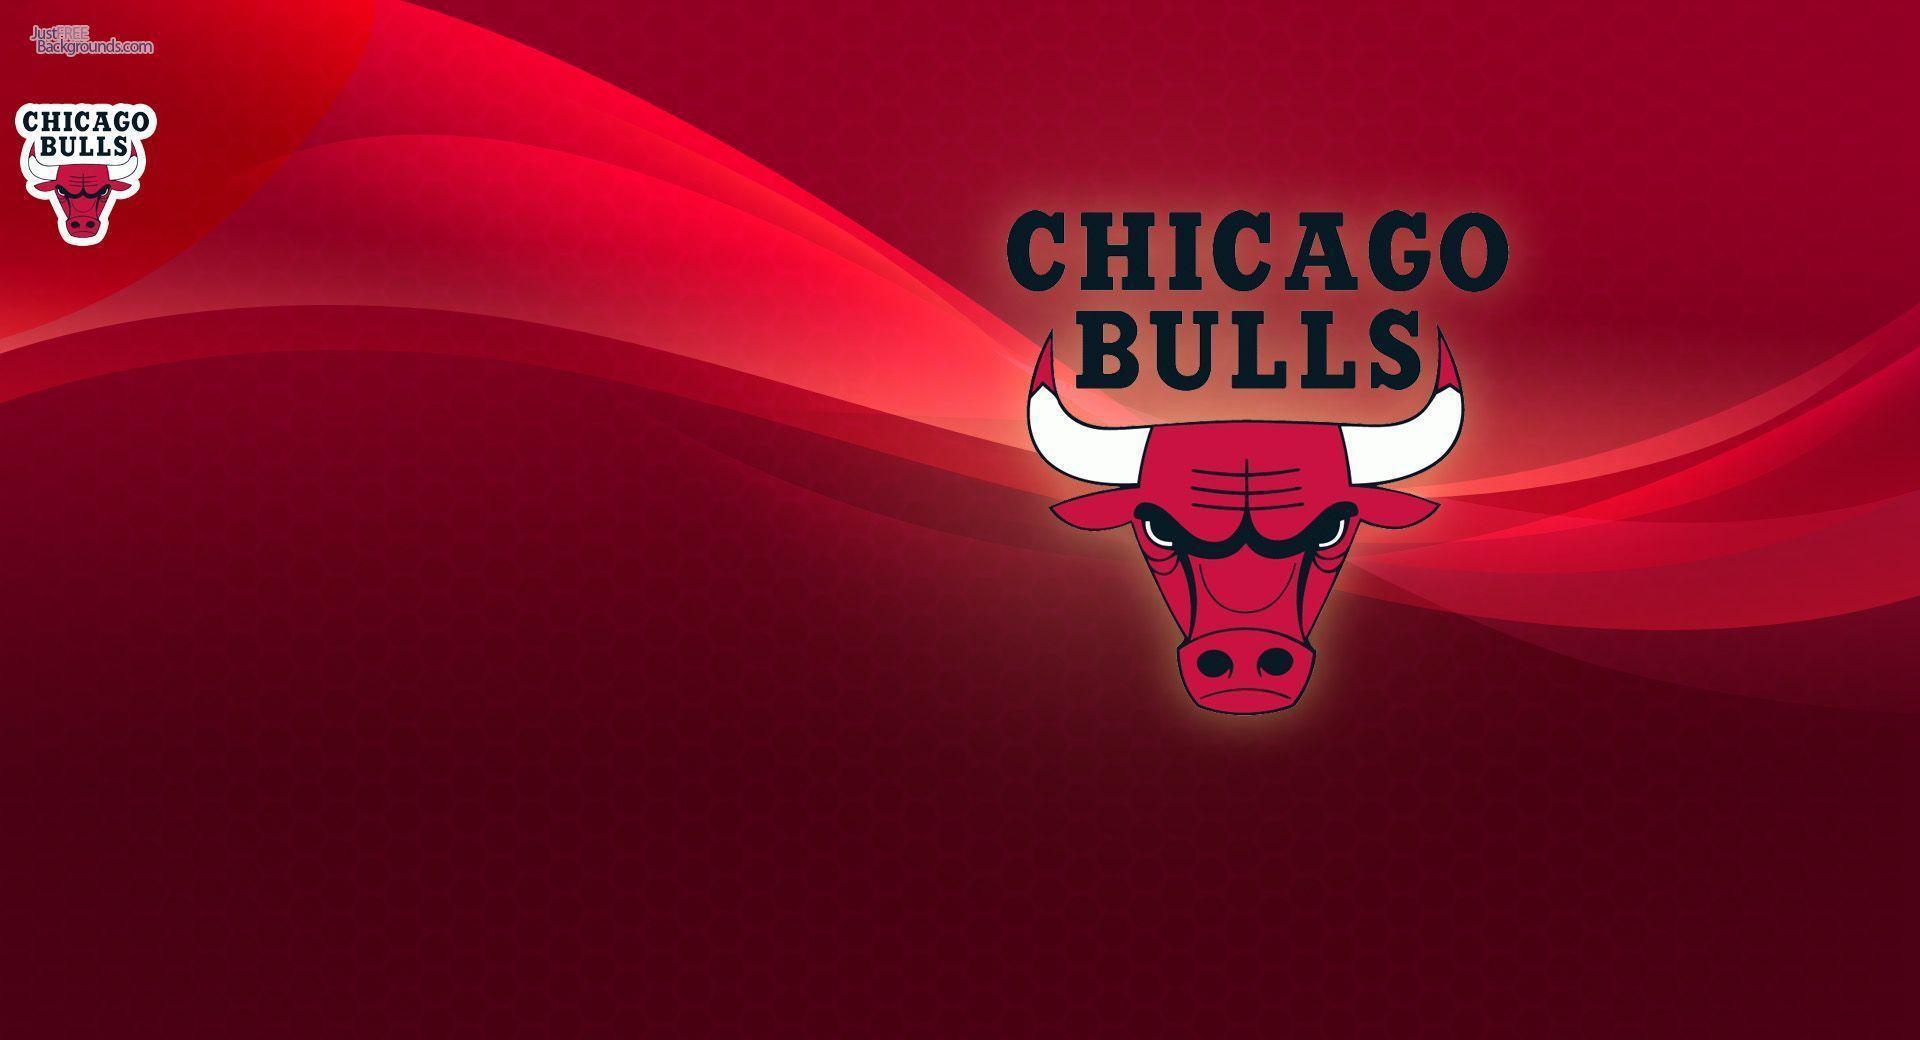 Chicago Bulls 103 97287 Image HD Wallpaper. Wallfoy.com